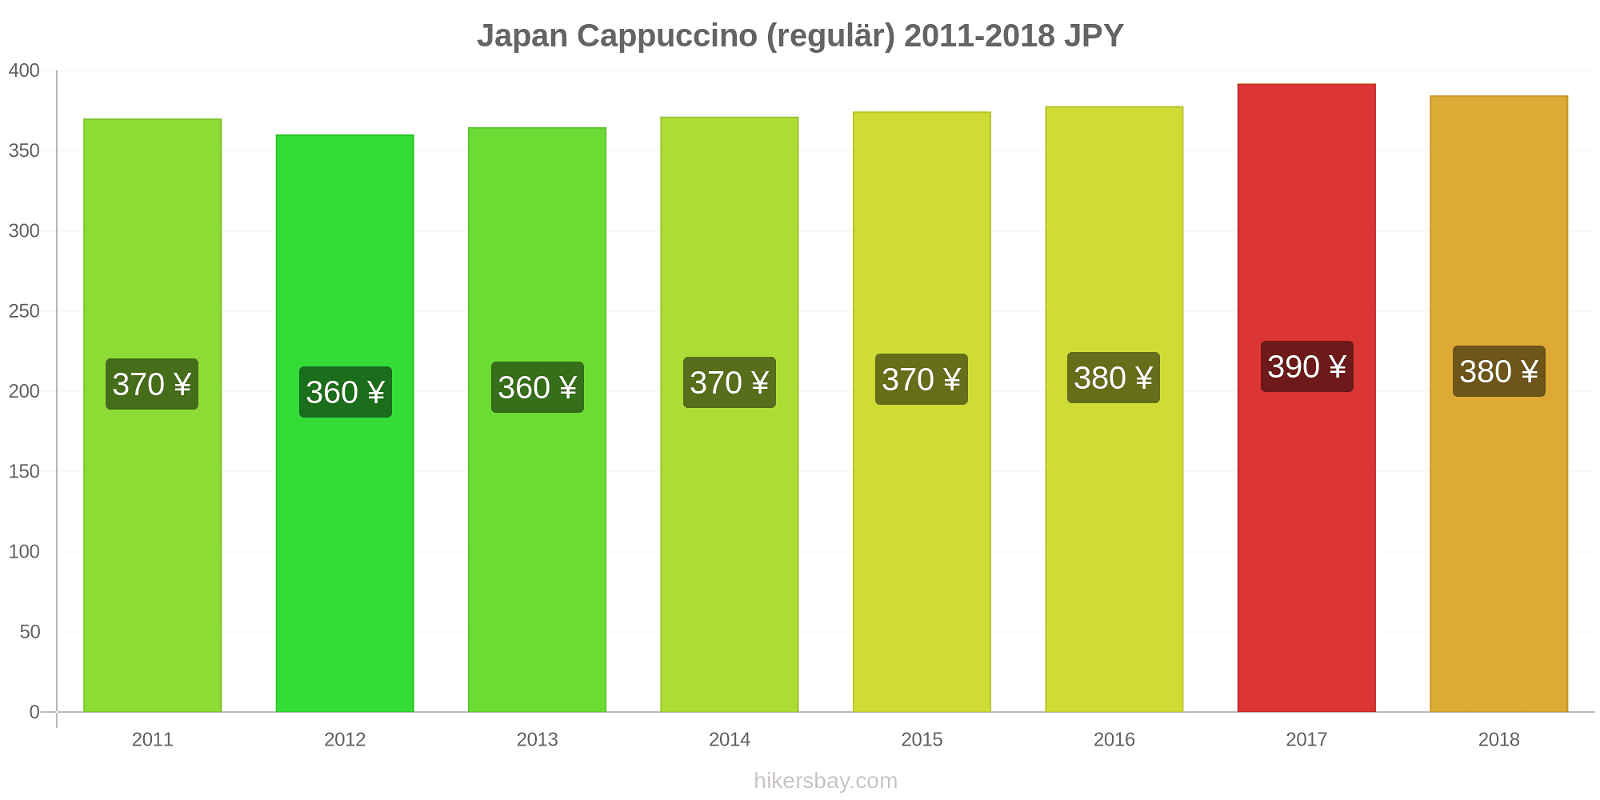 Japan Preisänderungen Cappuccino (regulär) hikersbay.com